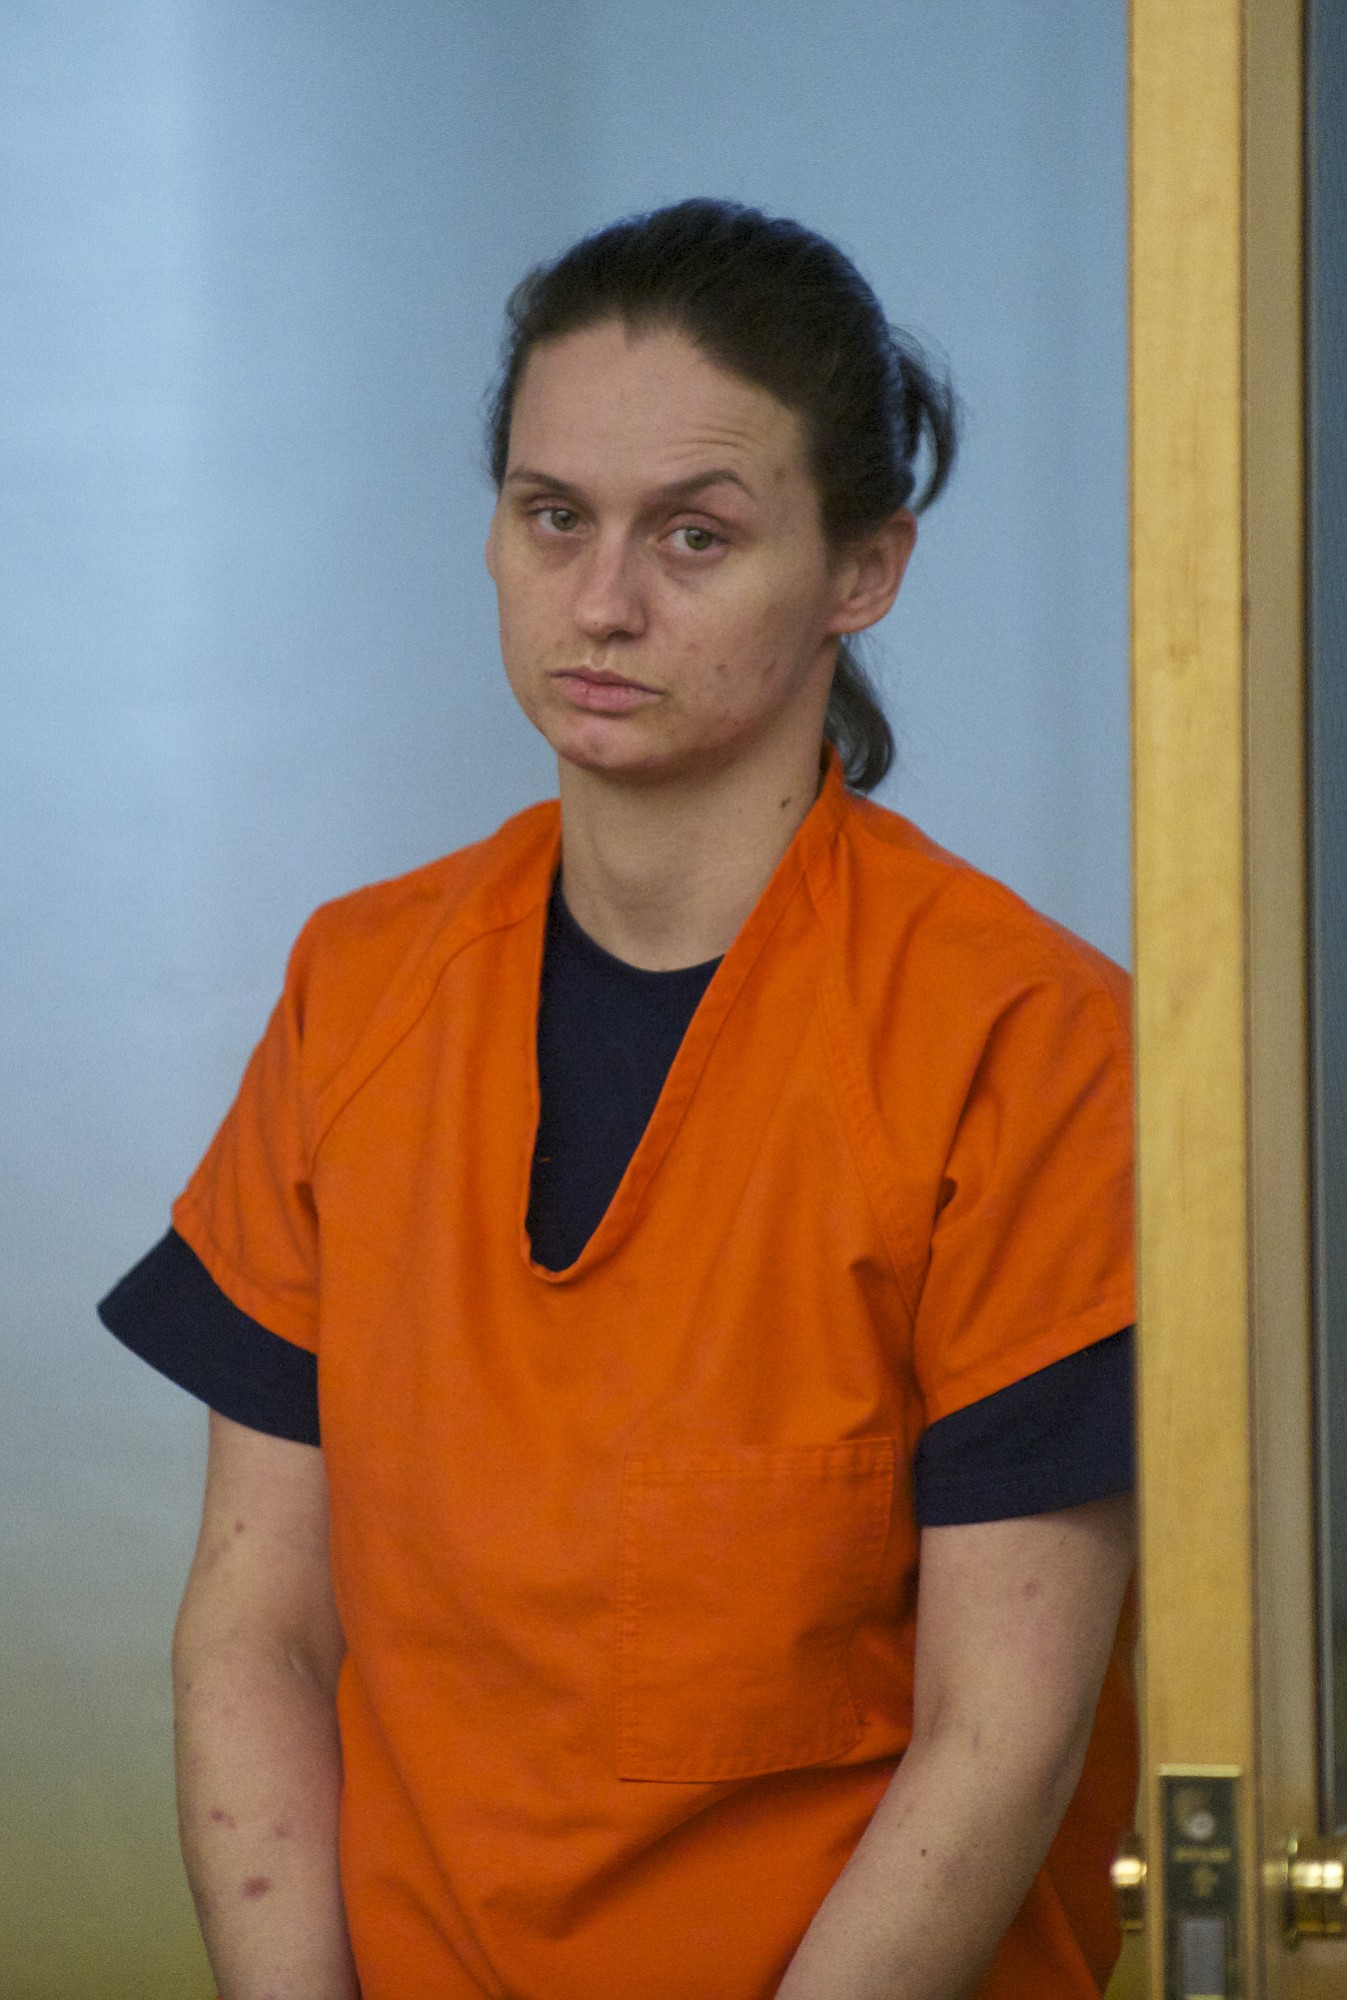 Jessica VanWechel was sentenced to 57 months in prison.